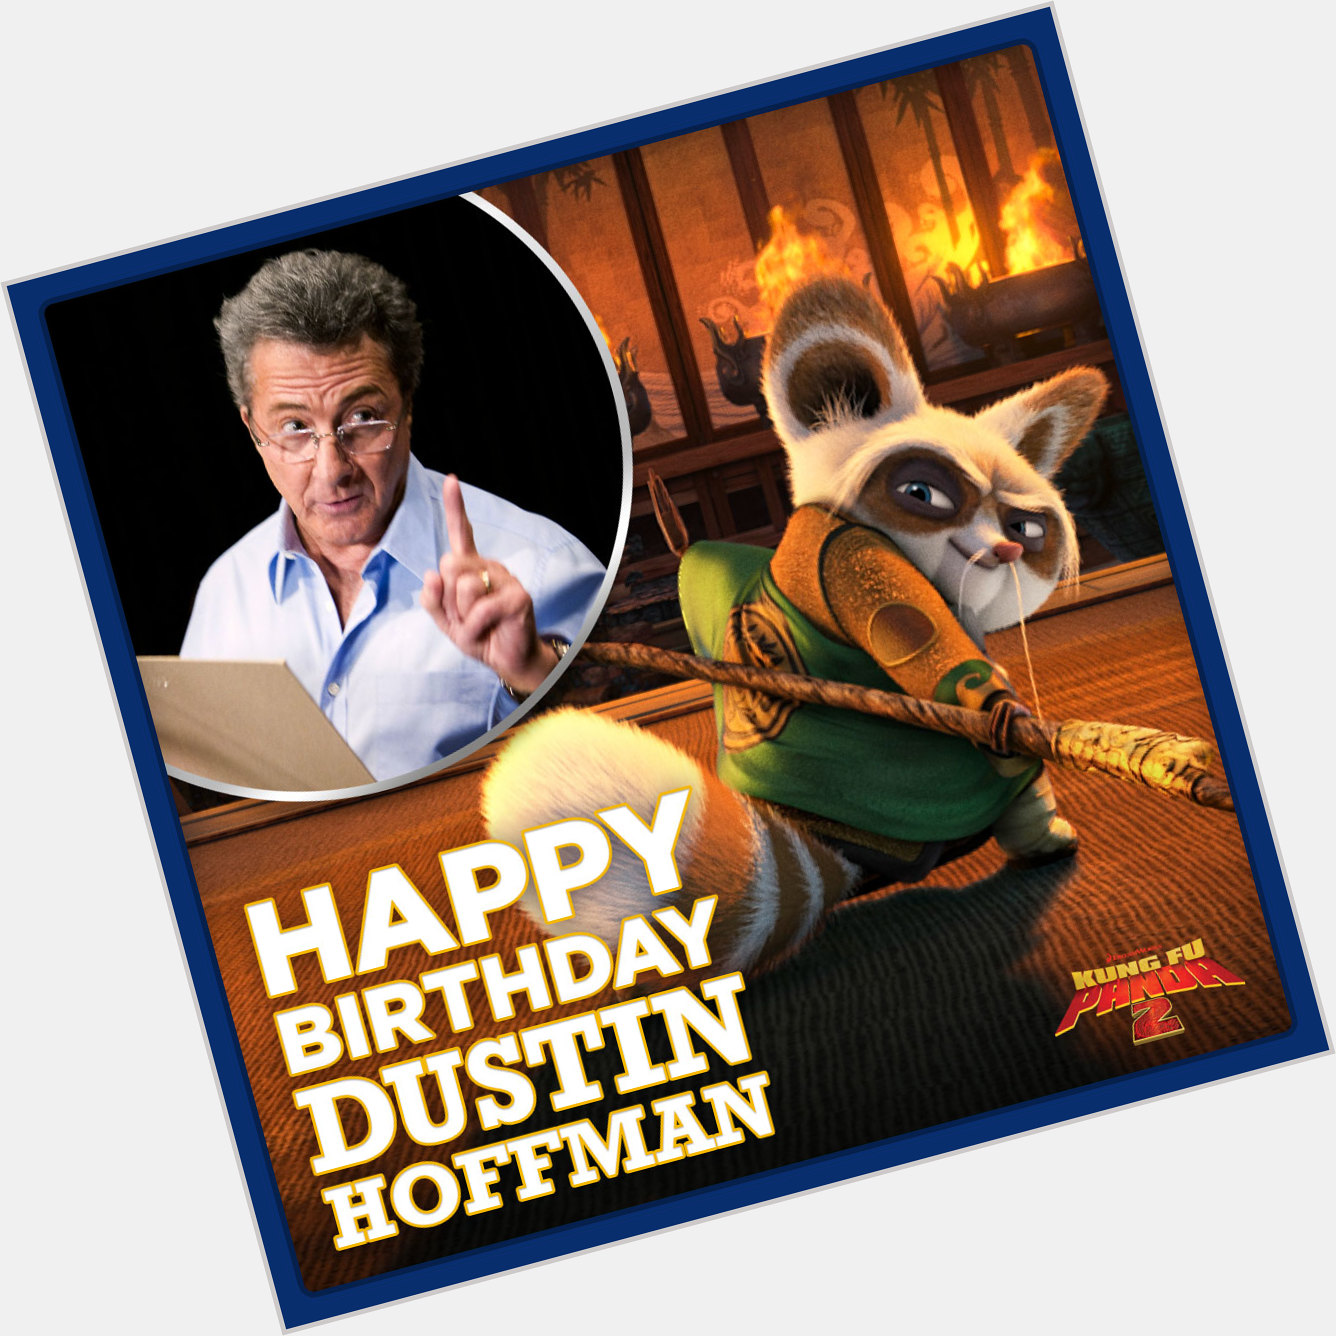   Happy Birthday, Dustin Hoffman! 